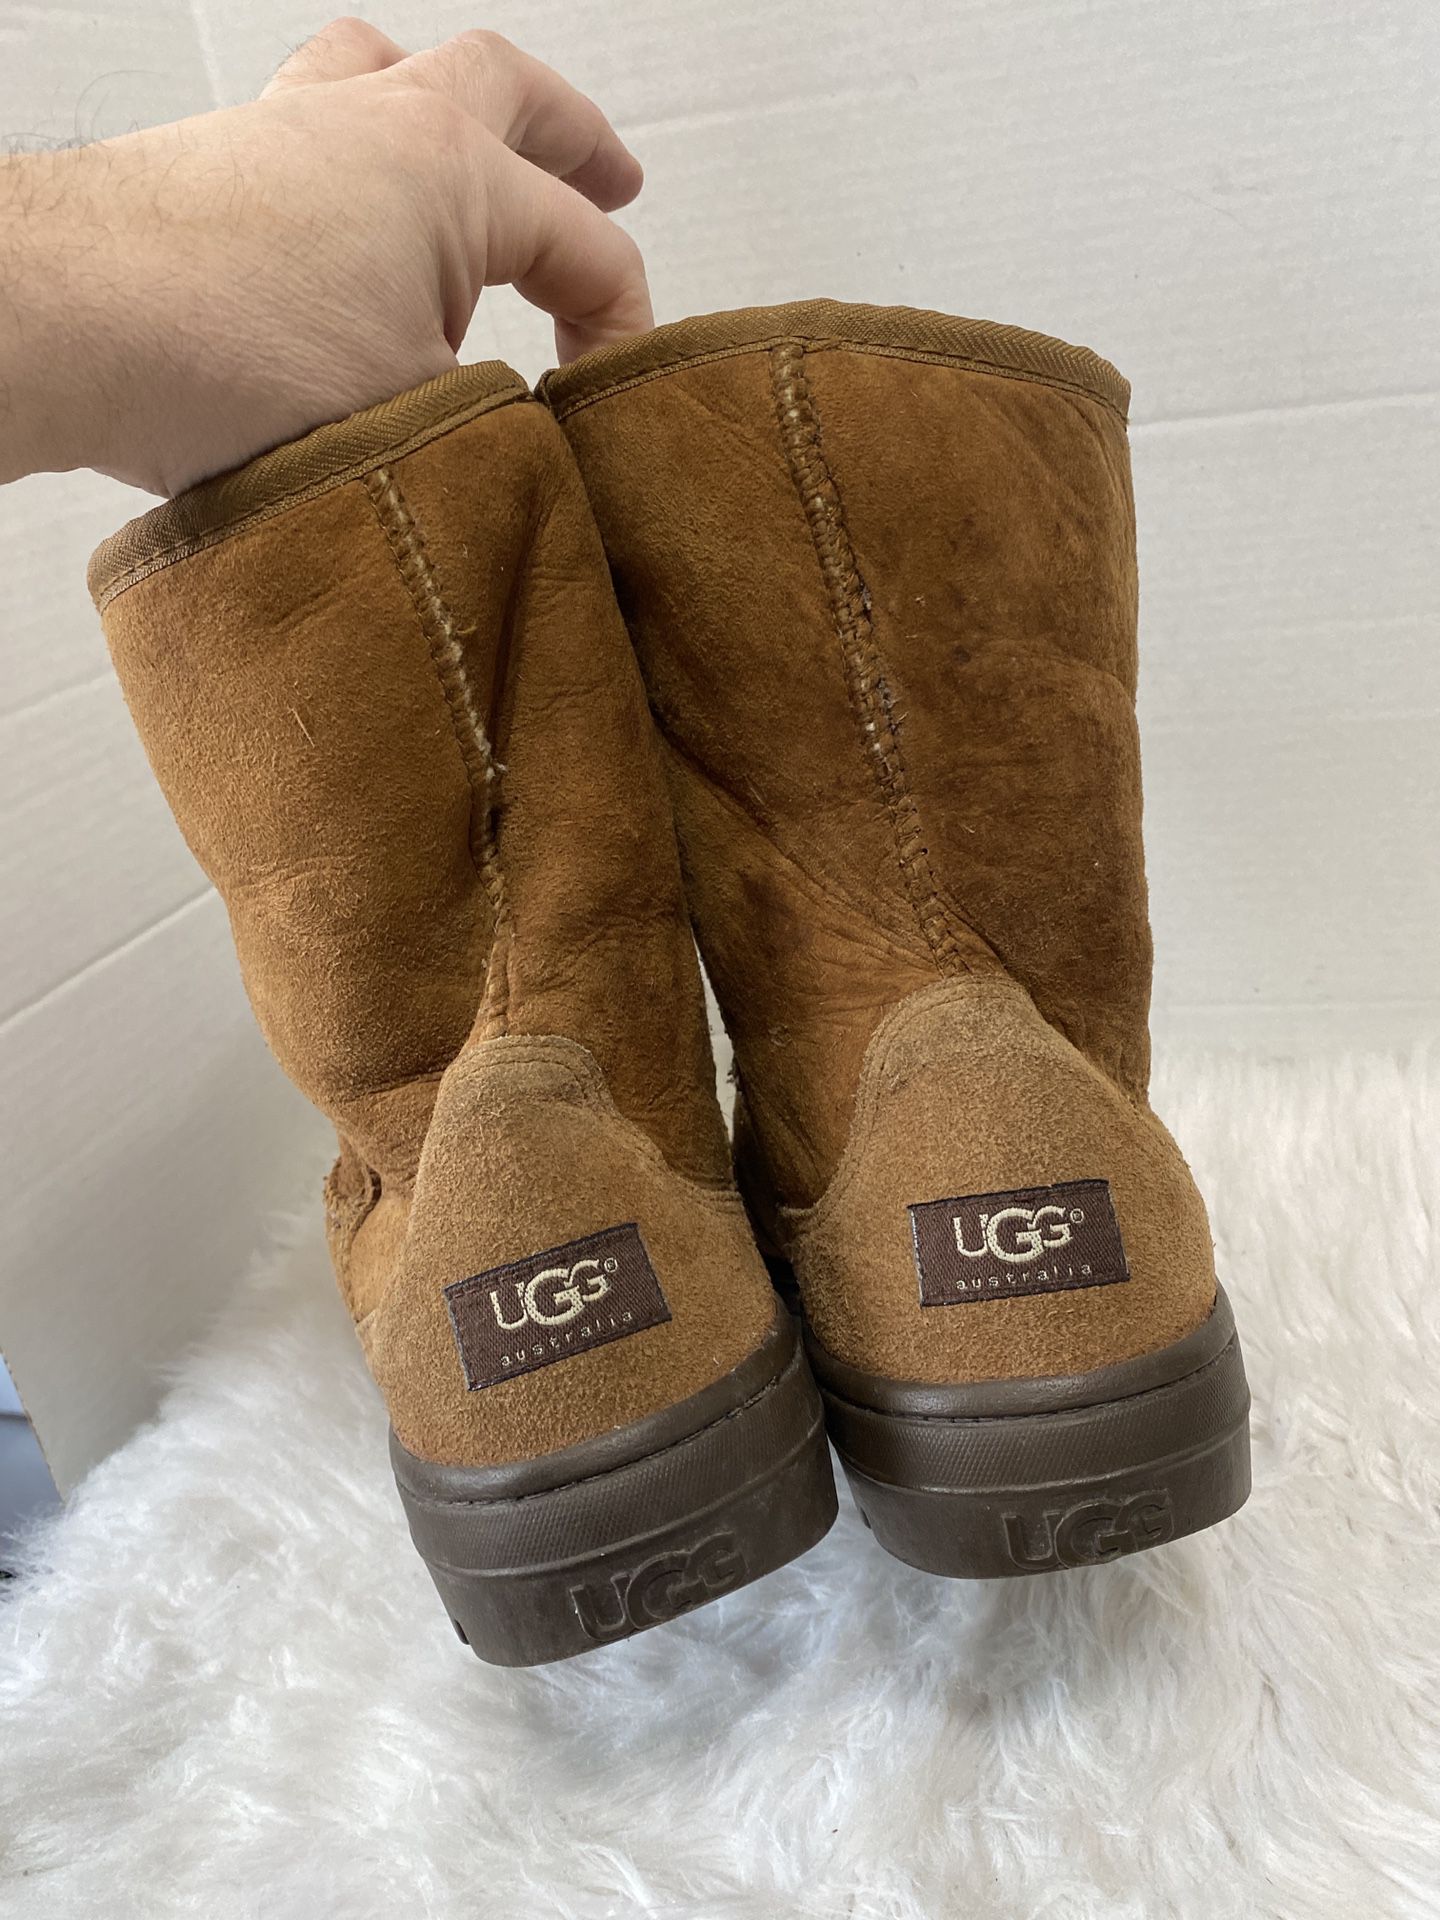 UGG Australia Men's Short Boots 5220 Chestnut Brown with Sheepskin Size 9 US